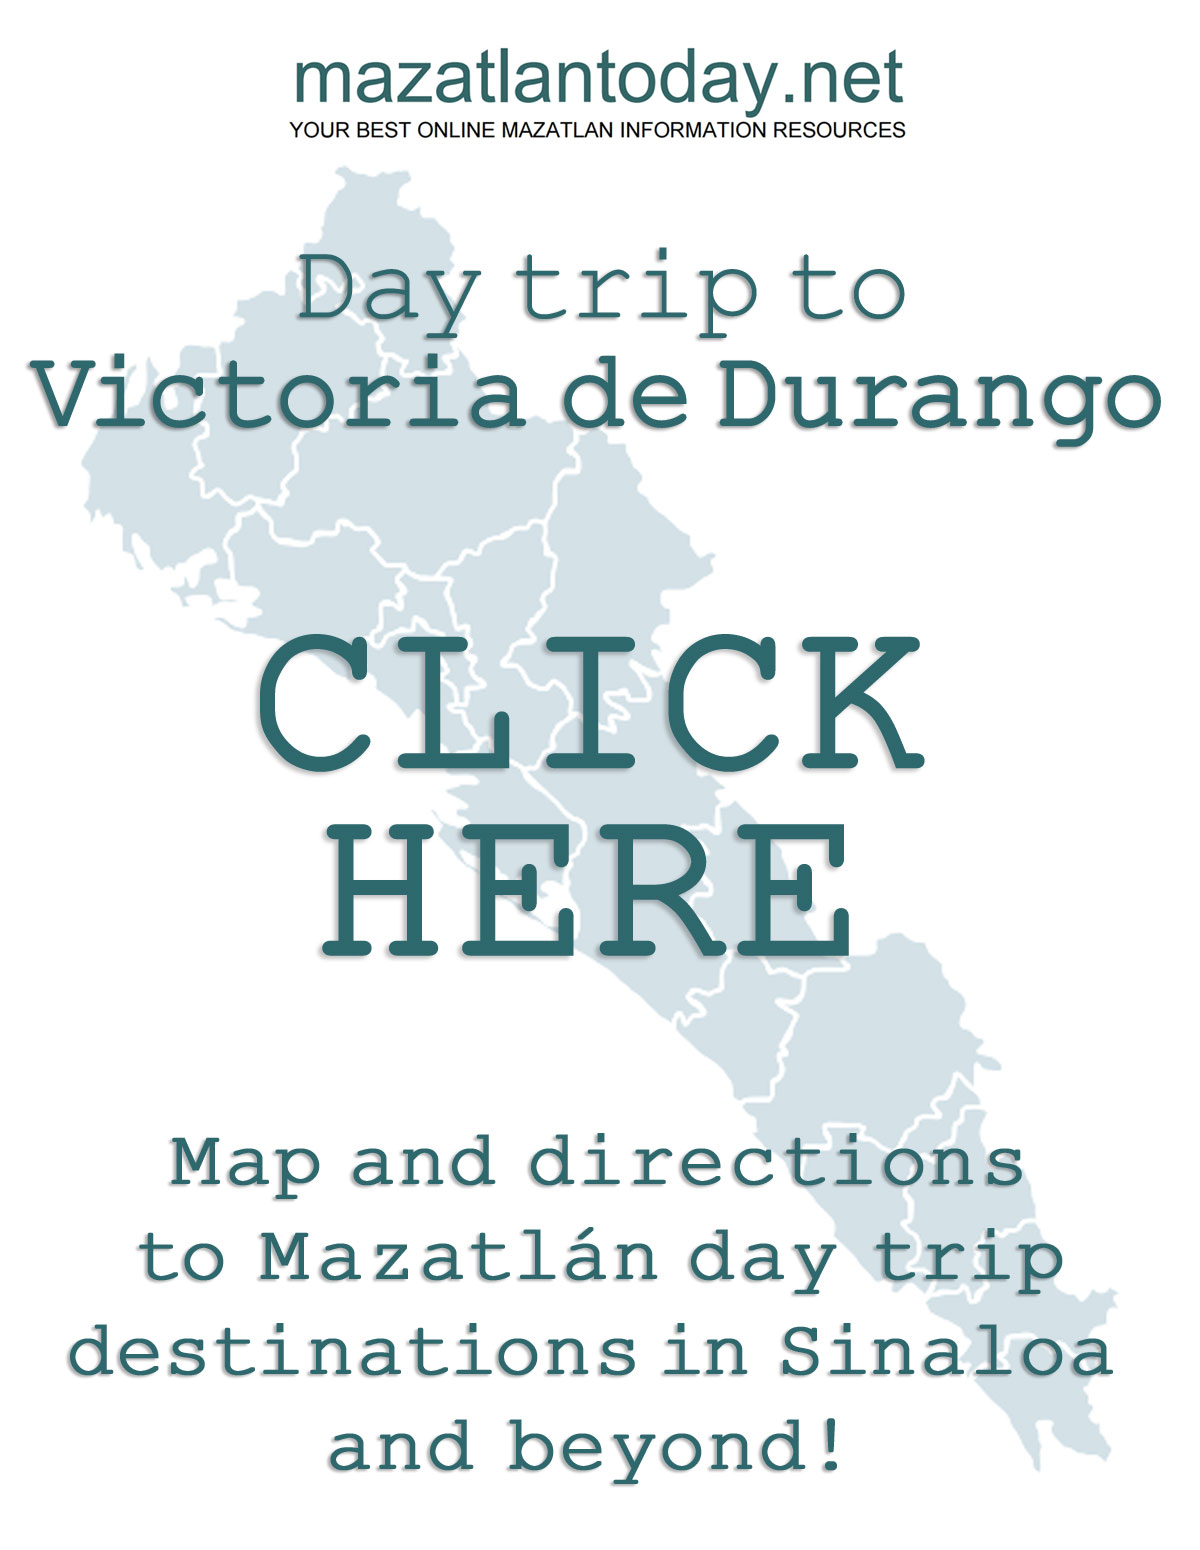 Download free Mazatlan - Victoria de Durango day trip map and directions